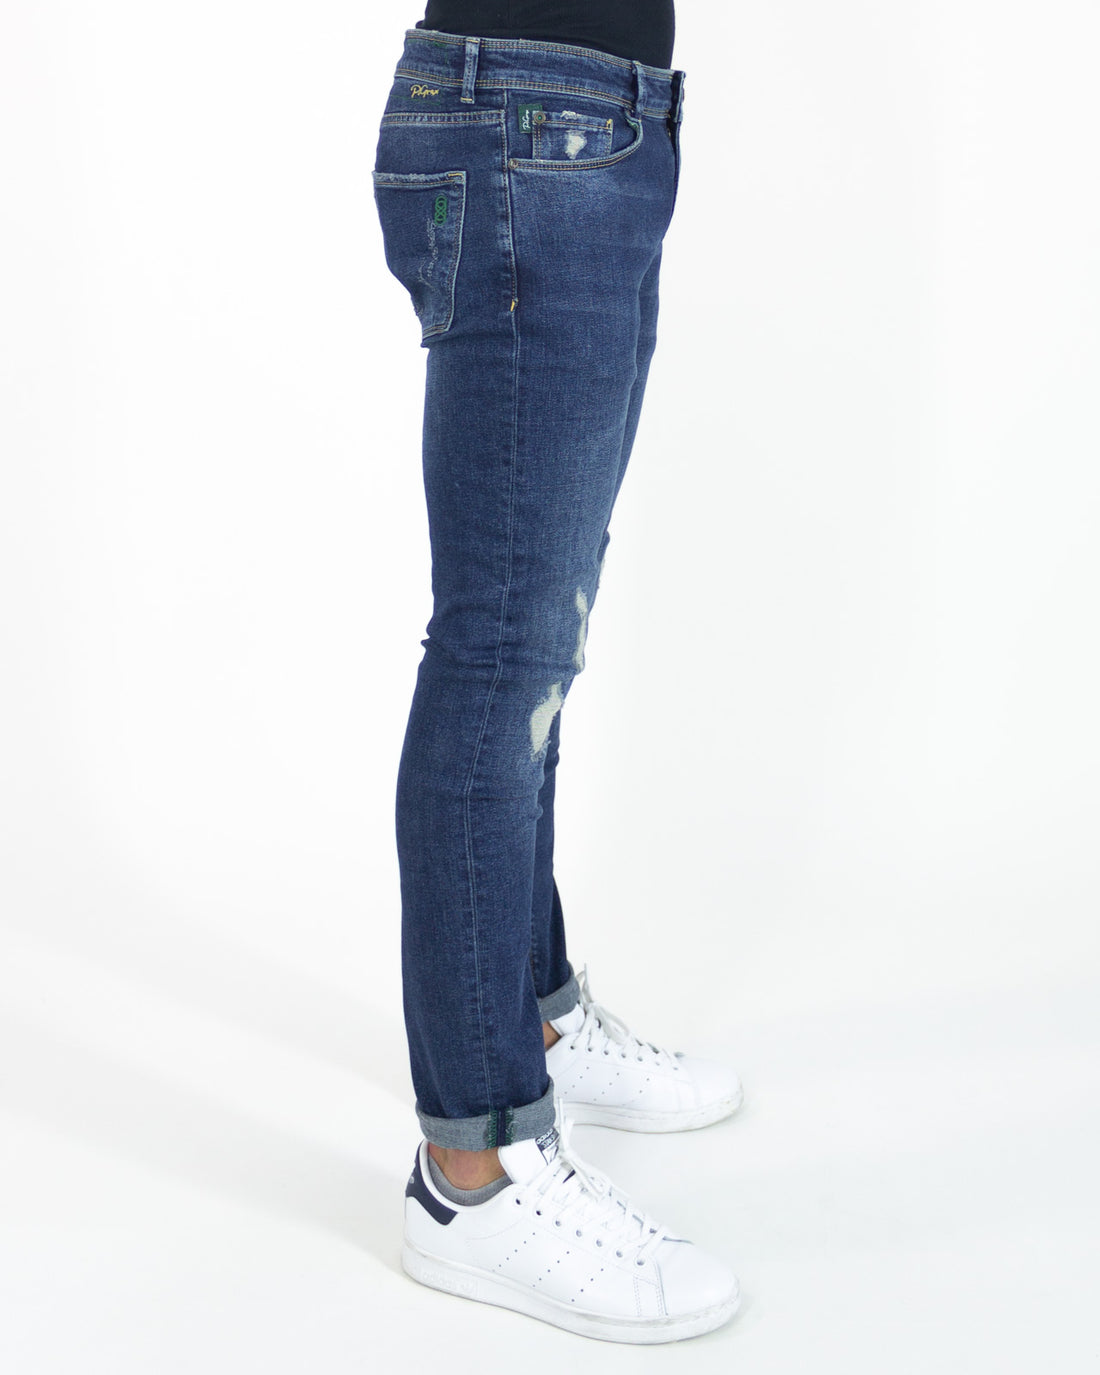 Jeans P.gtax Art. Z702 Slim Fit